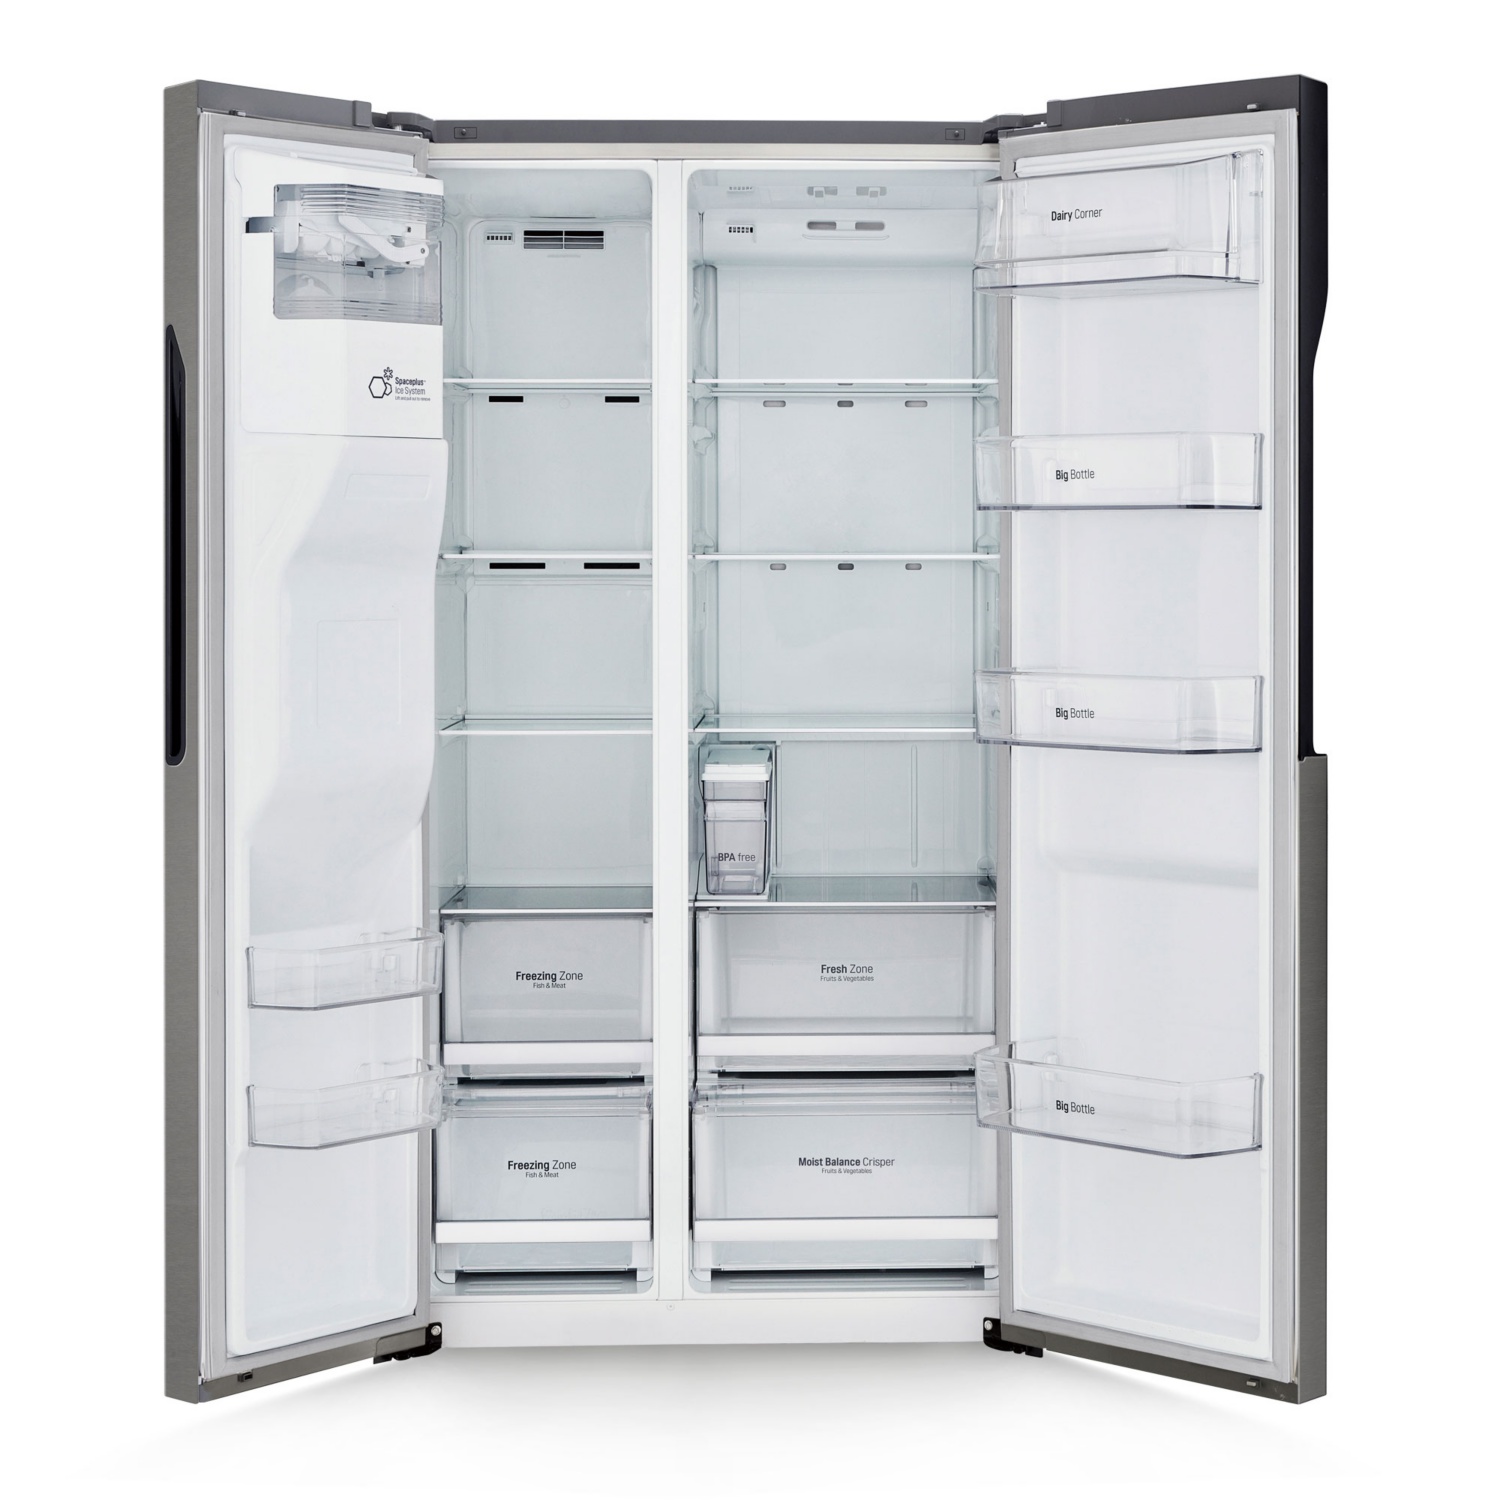 LG Side-by-Side-Kühlschrank